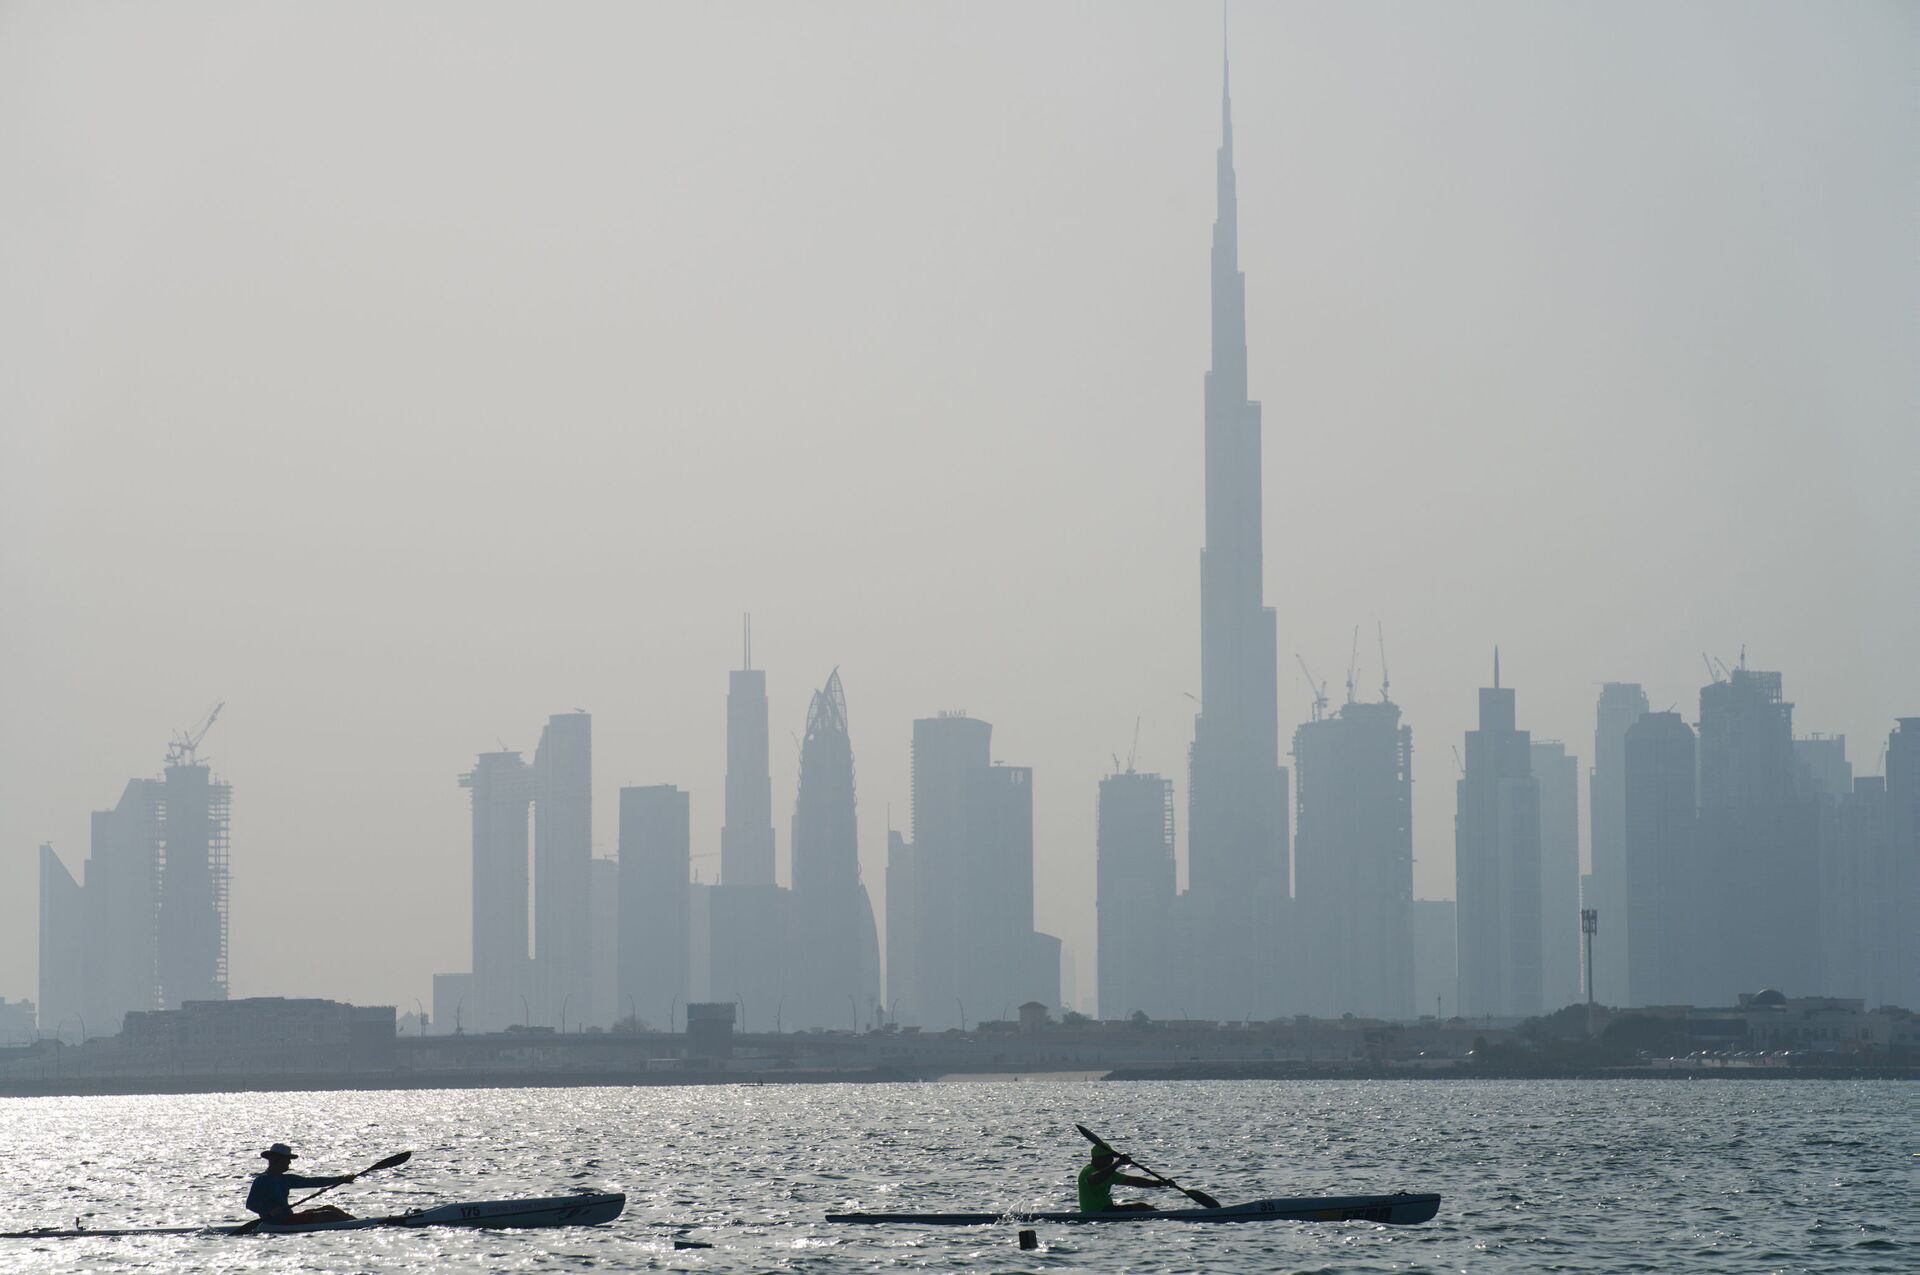 Kayakers race in front of the Burj Khalifa, the world's tallest building, off the coast of Dubai, United Arab Emirates, Friday, June 19, 2020 - Sputnik International, 1920, 07.09.2021